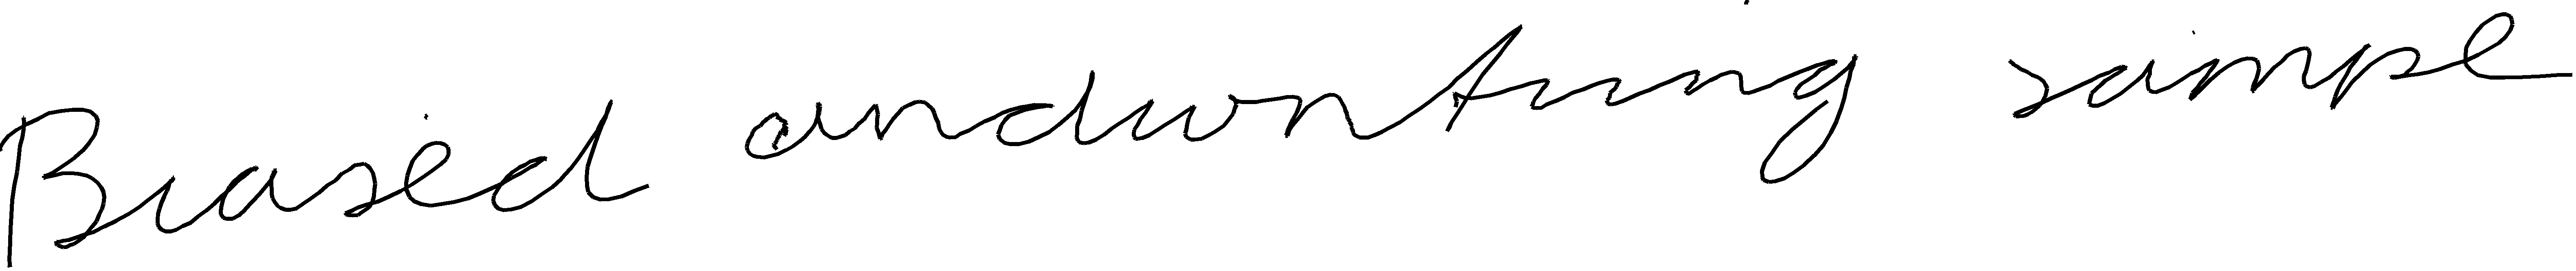 Biased_handwriting_sample__1.png